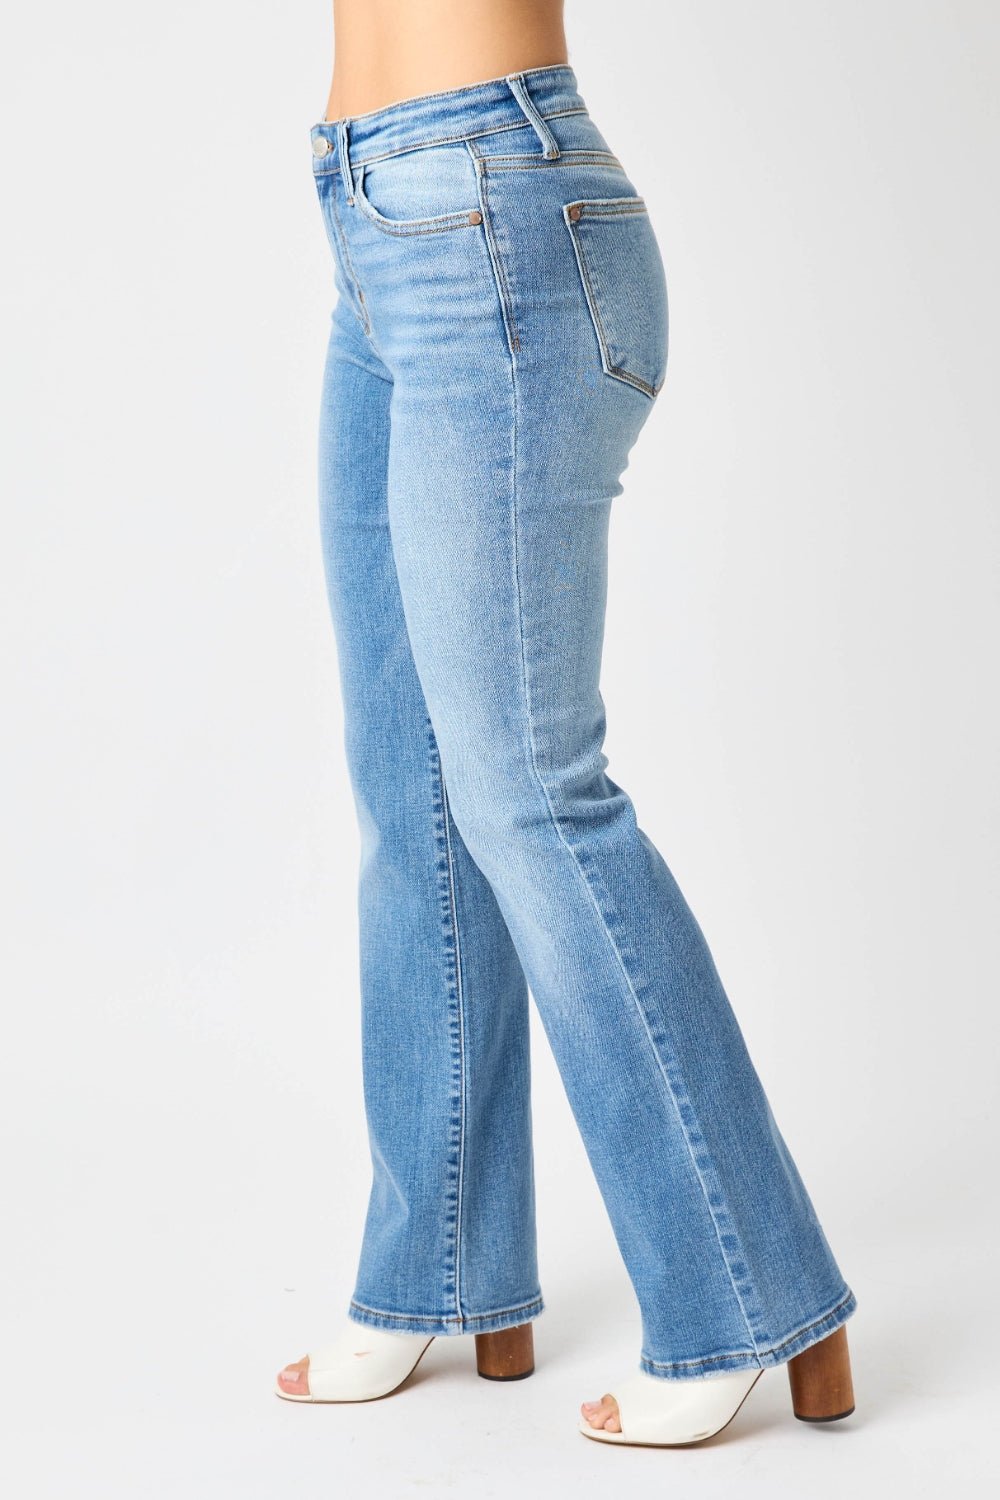 Judy Blue Full Size High Waist Straight Jeans - My Threaded Apparel | Online Women's Boutique - denim jeans